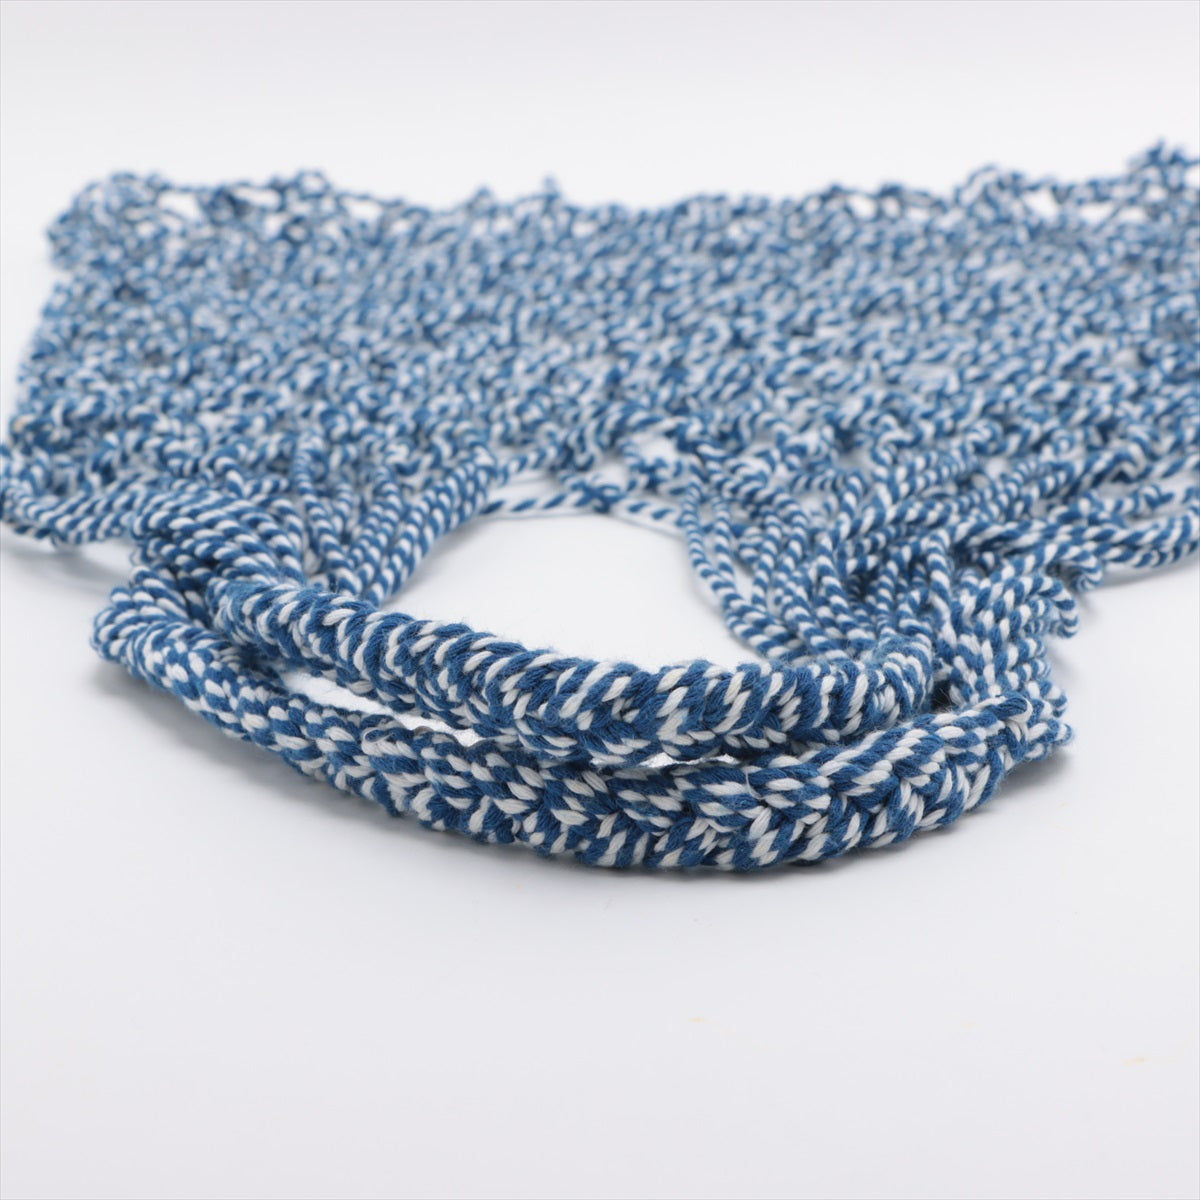 Celine Nonevelty Fabric Handbag Blue Net Woven